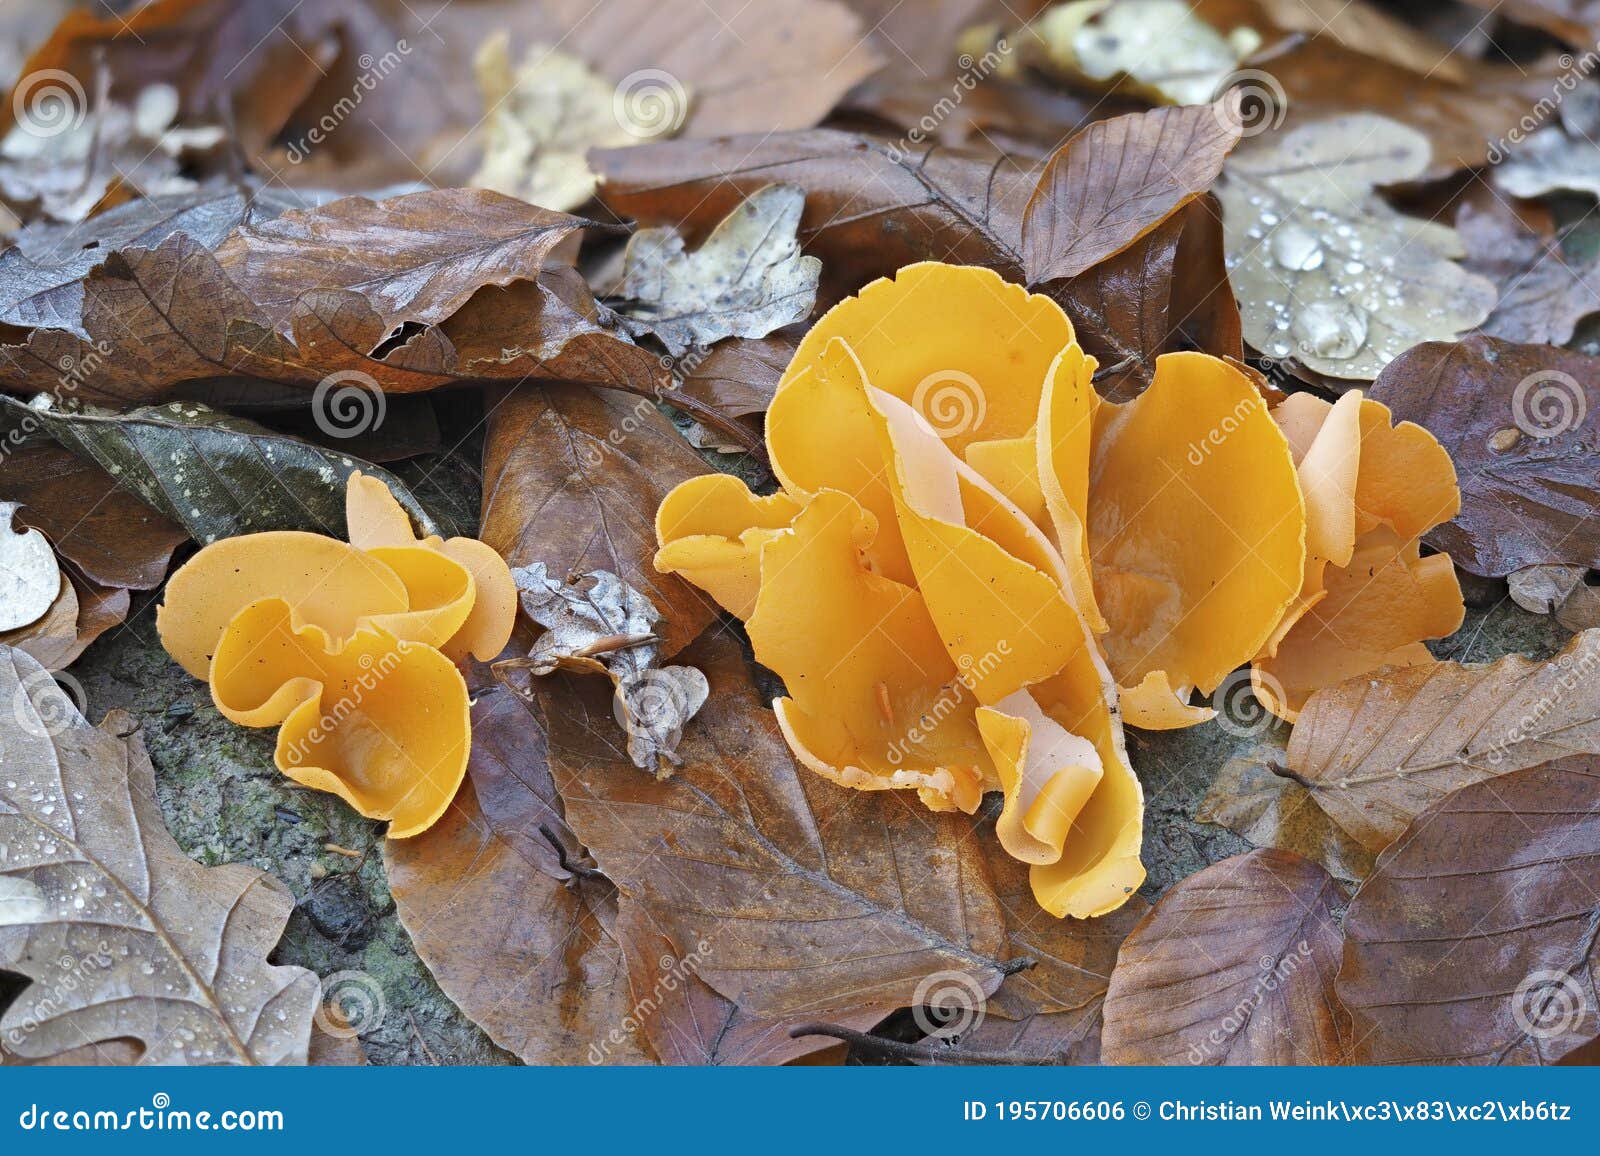 the orange peel fungus